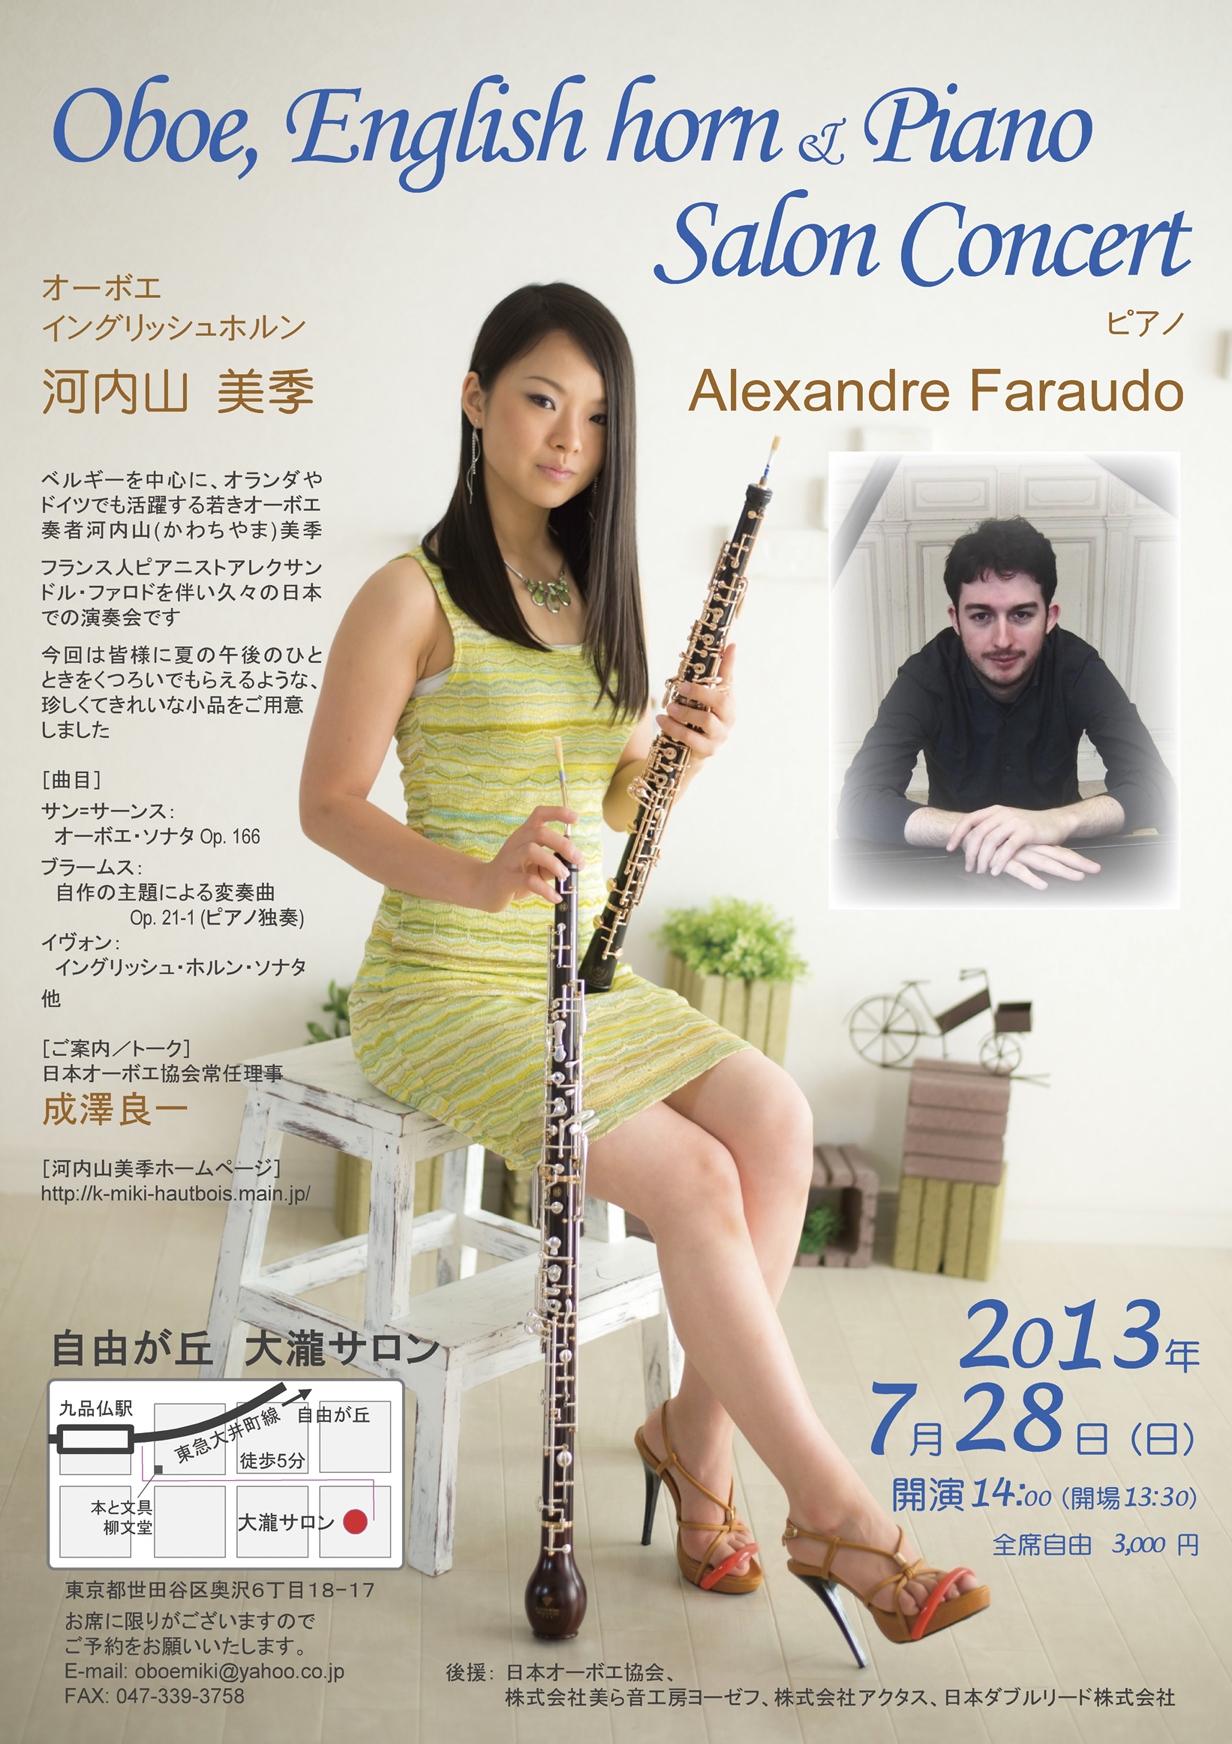 http://k-miki-hautbois.main.jp/flyer/20130728otakisalon.jpg